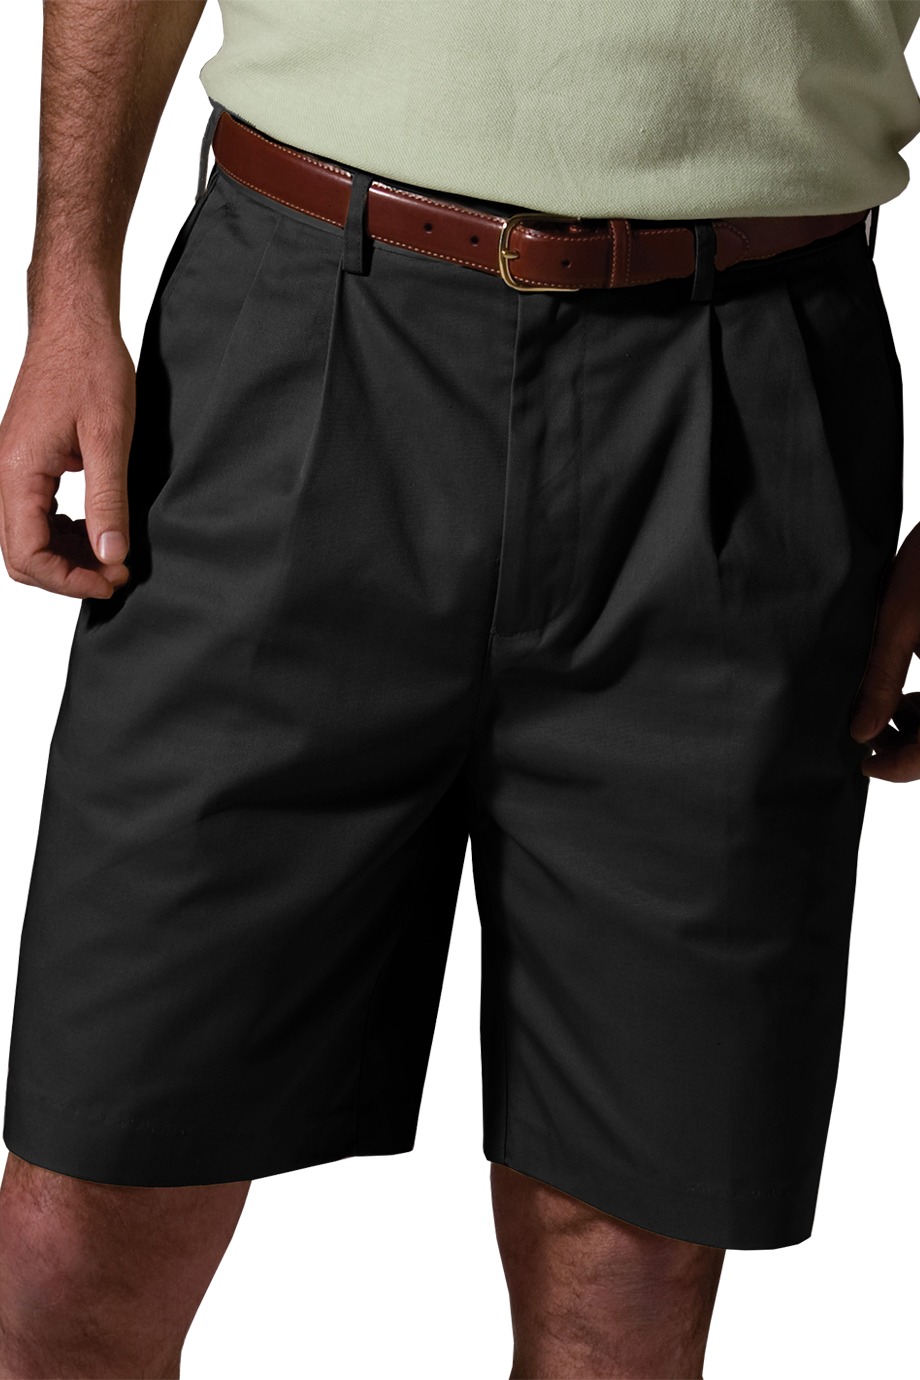 Edwards Garment 2477 - Men's Utility Pleated Short $18.40 - Men's Shorts